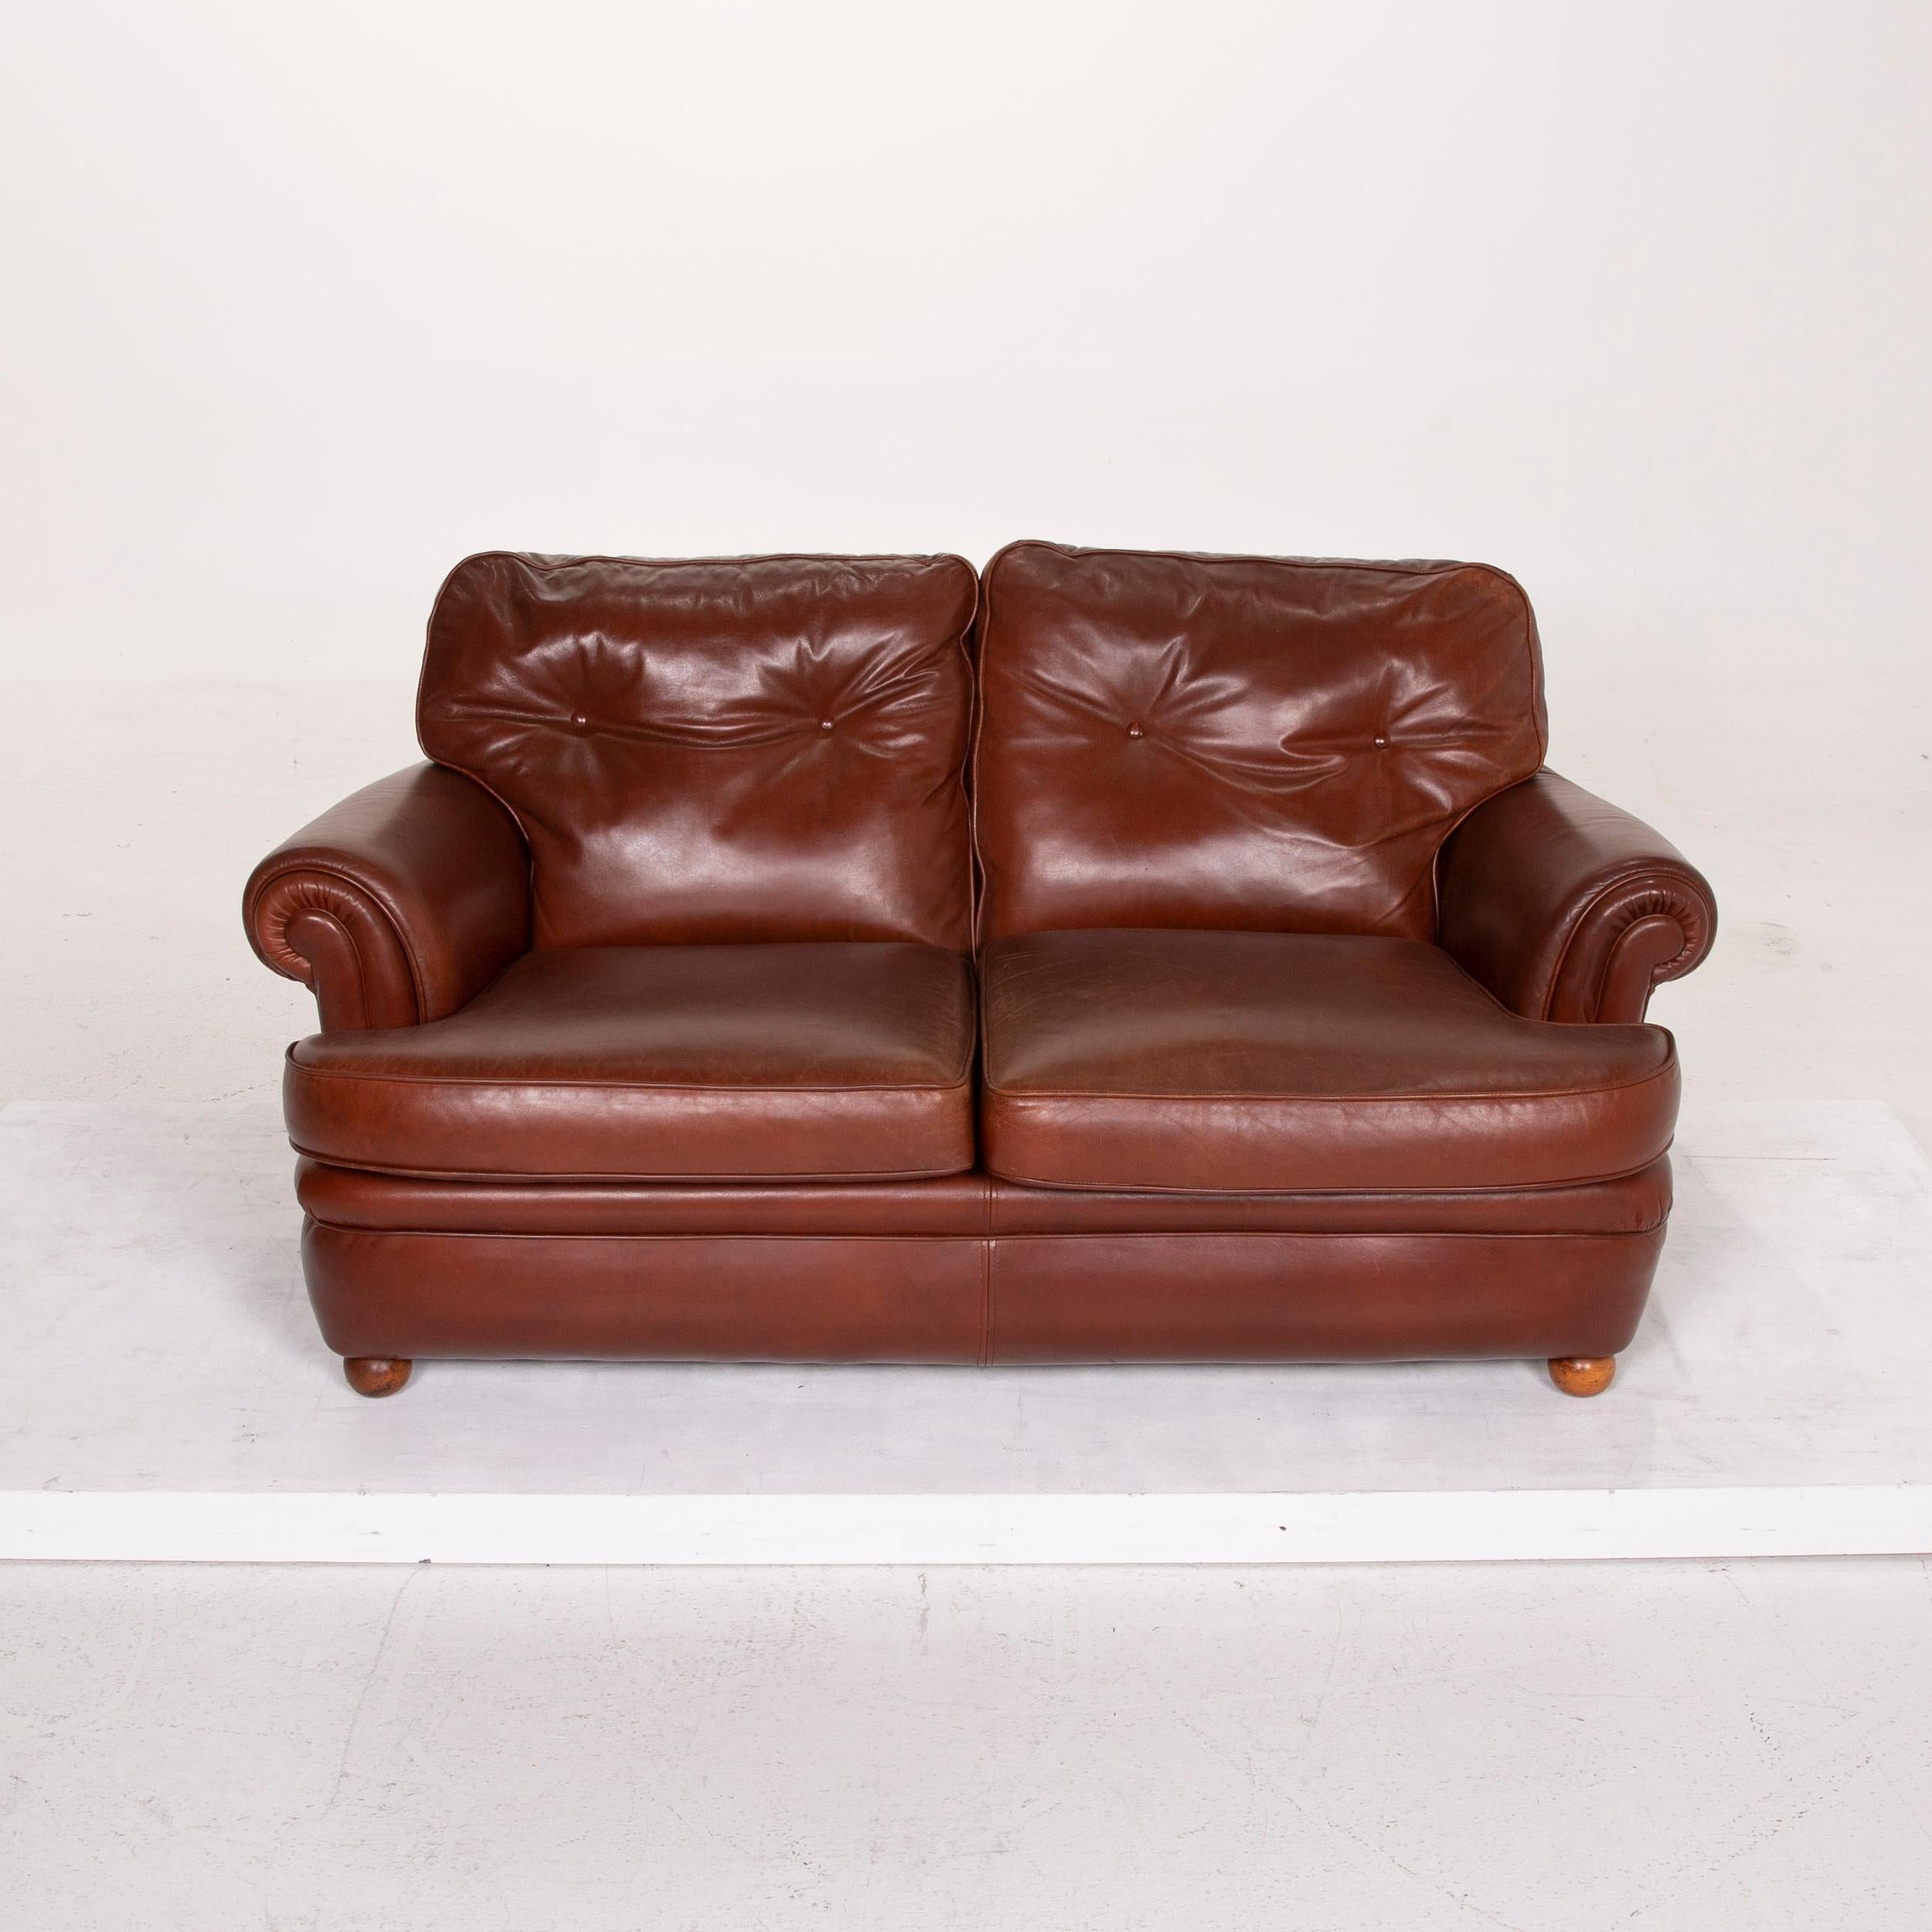 Poltrona Frau Leather Sofa Set Cognac Two-Seat Stool For Sale 2